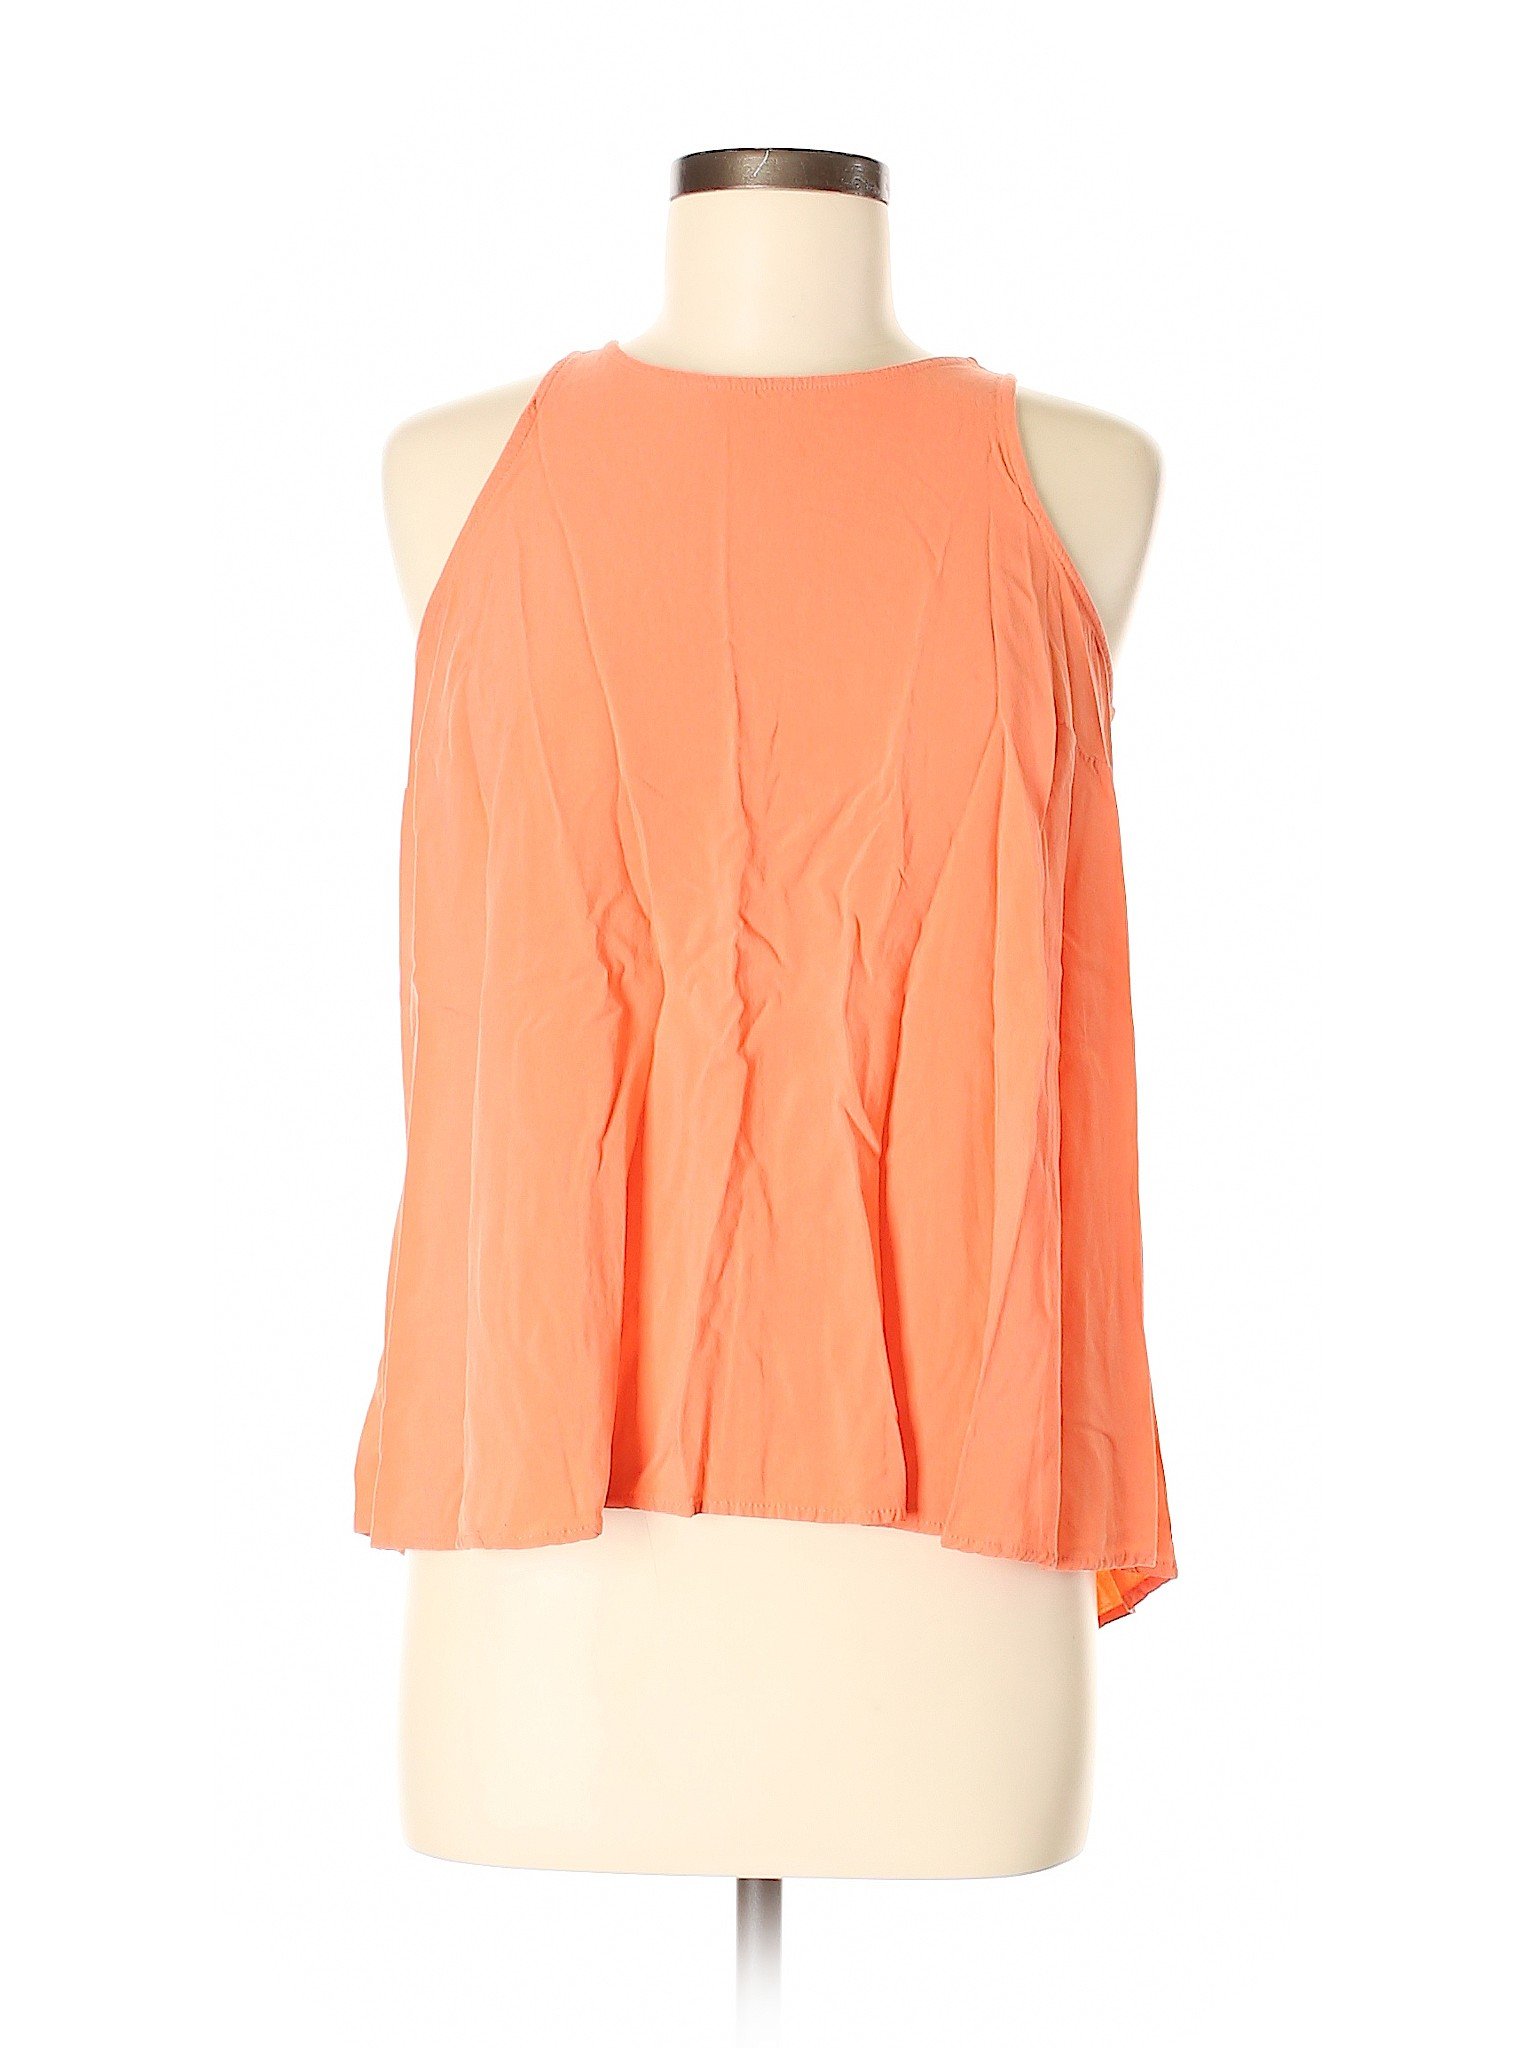 Old Navy Women Orange Sleeveless Blouse M | eBay